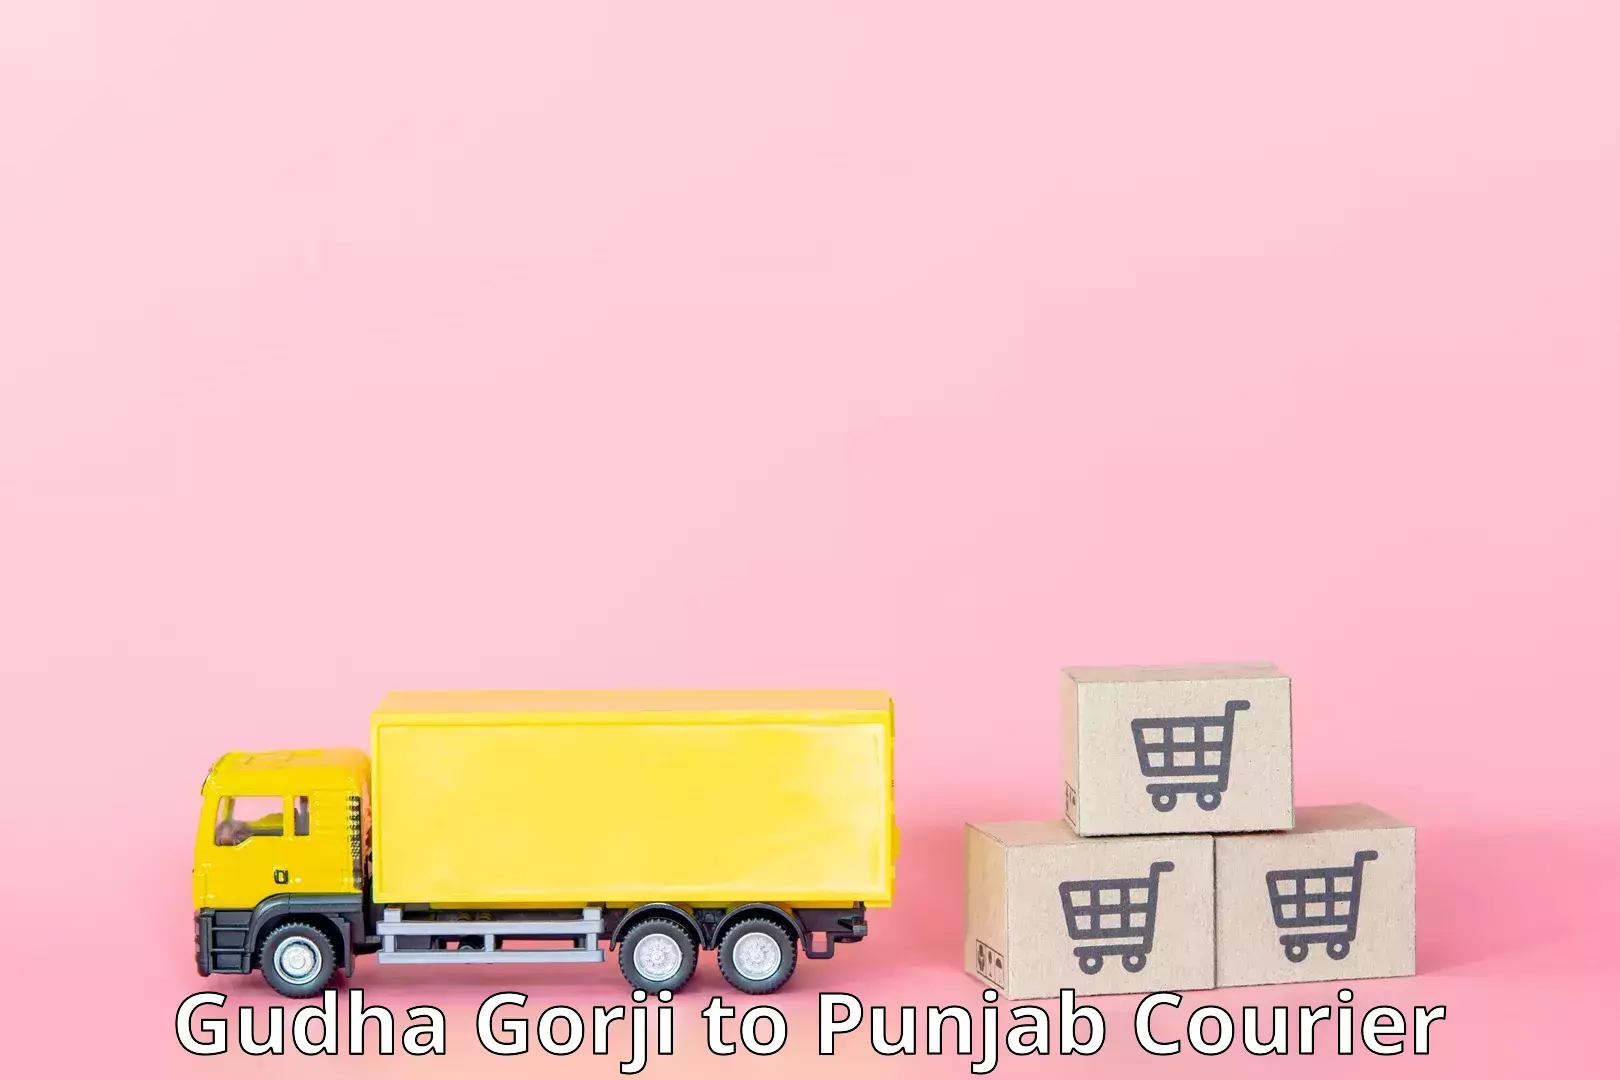 Global logistics network Gudha Gorji to Sultanpur Lodhi